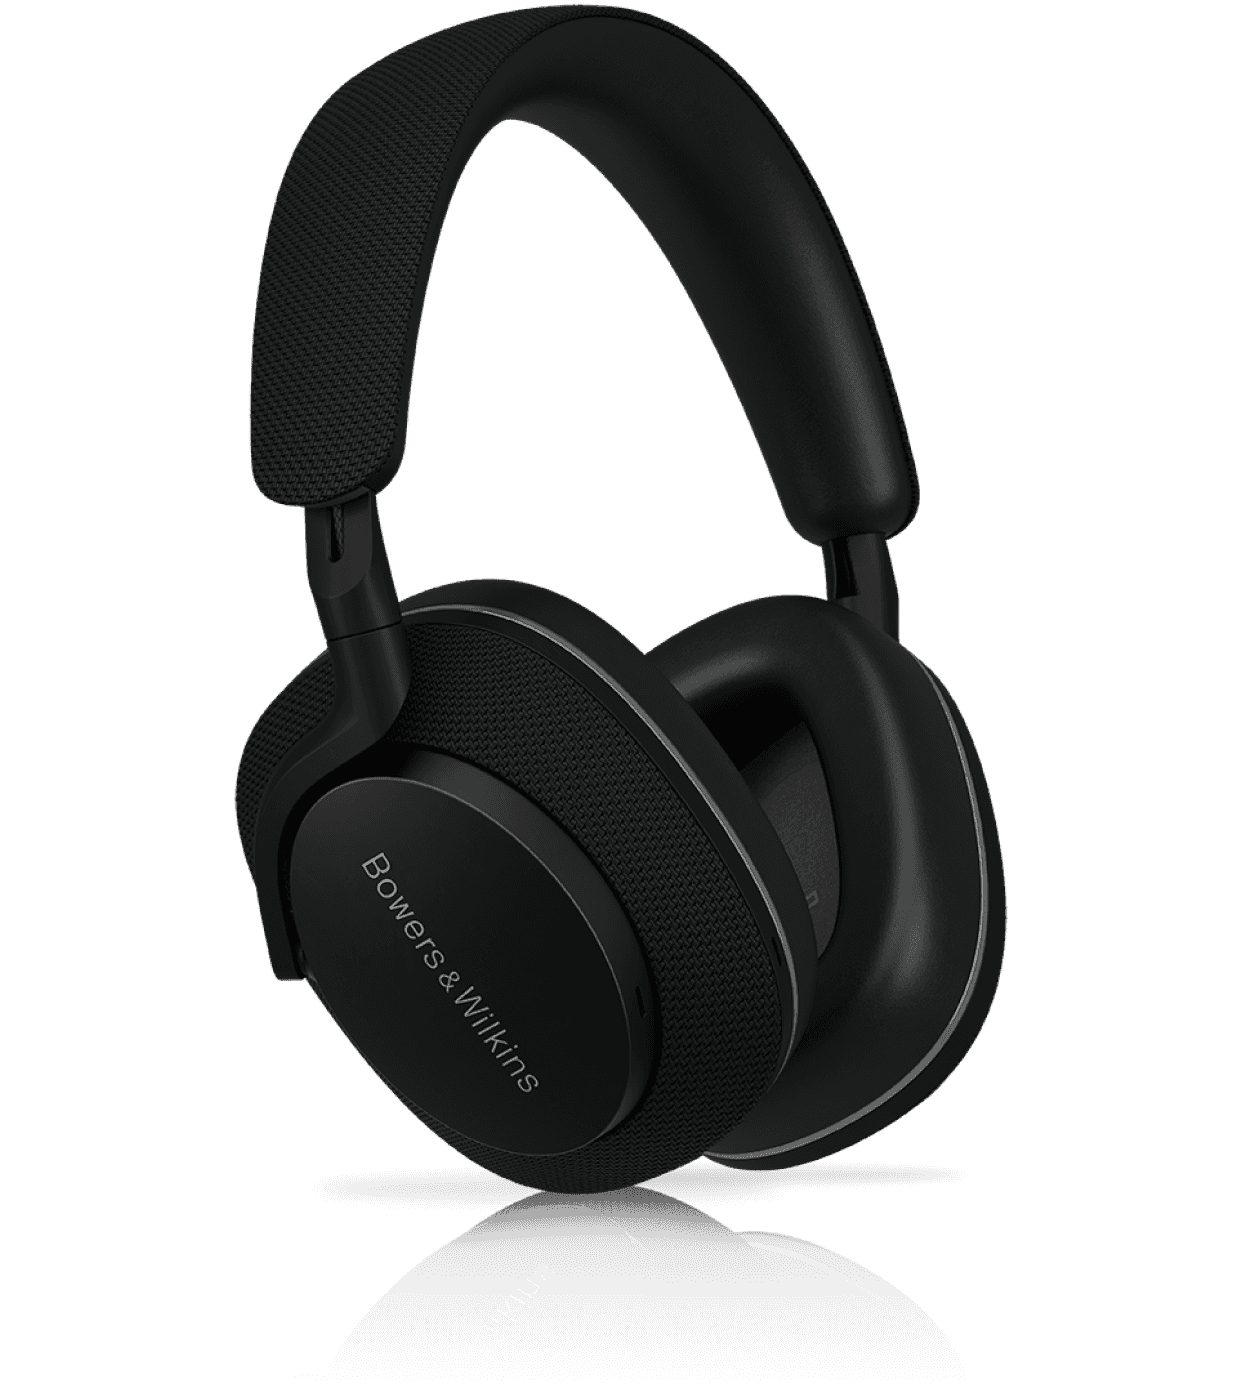 Px7 s2e Headphones -  Bowers & Wilkins